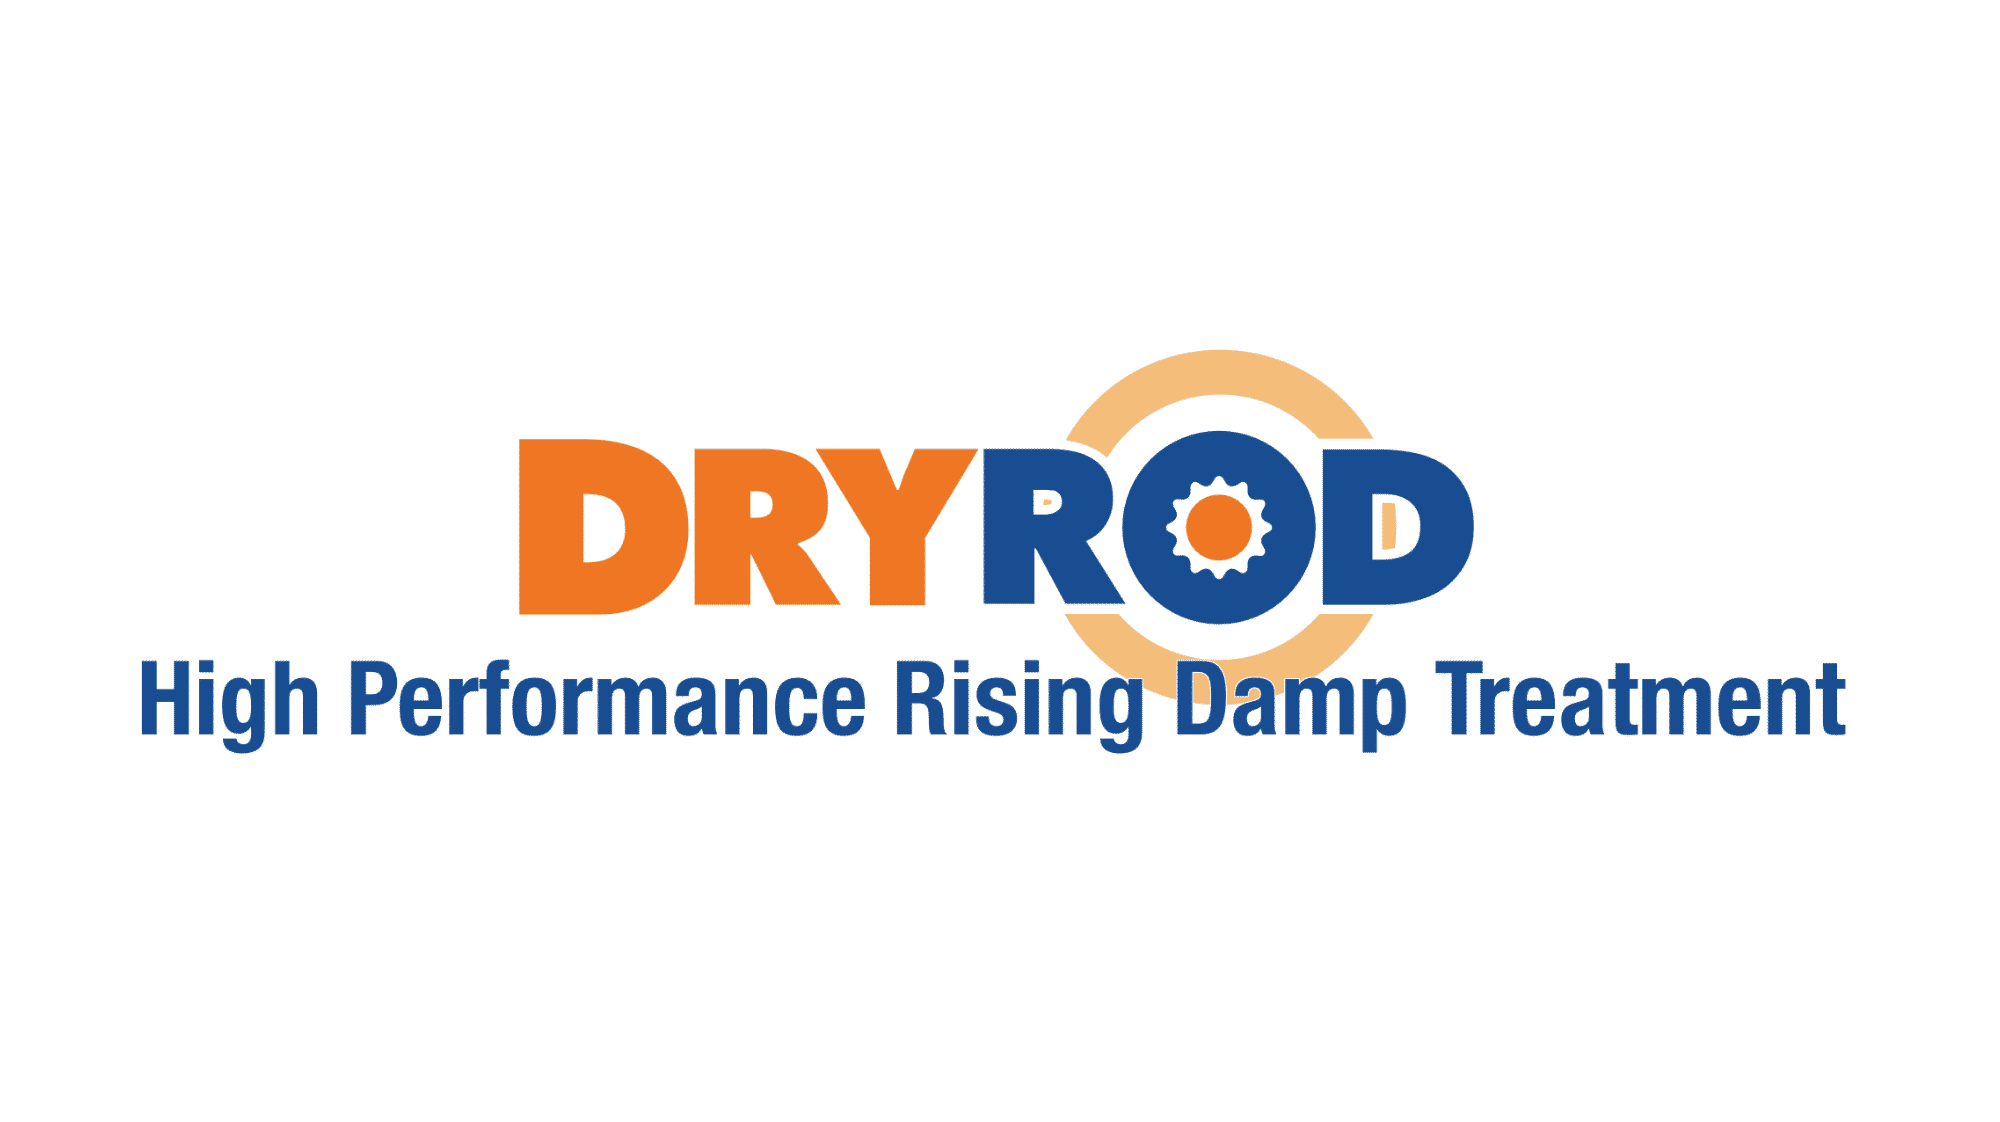 Dryrod